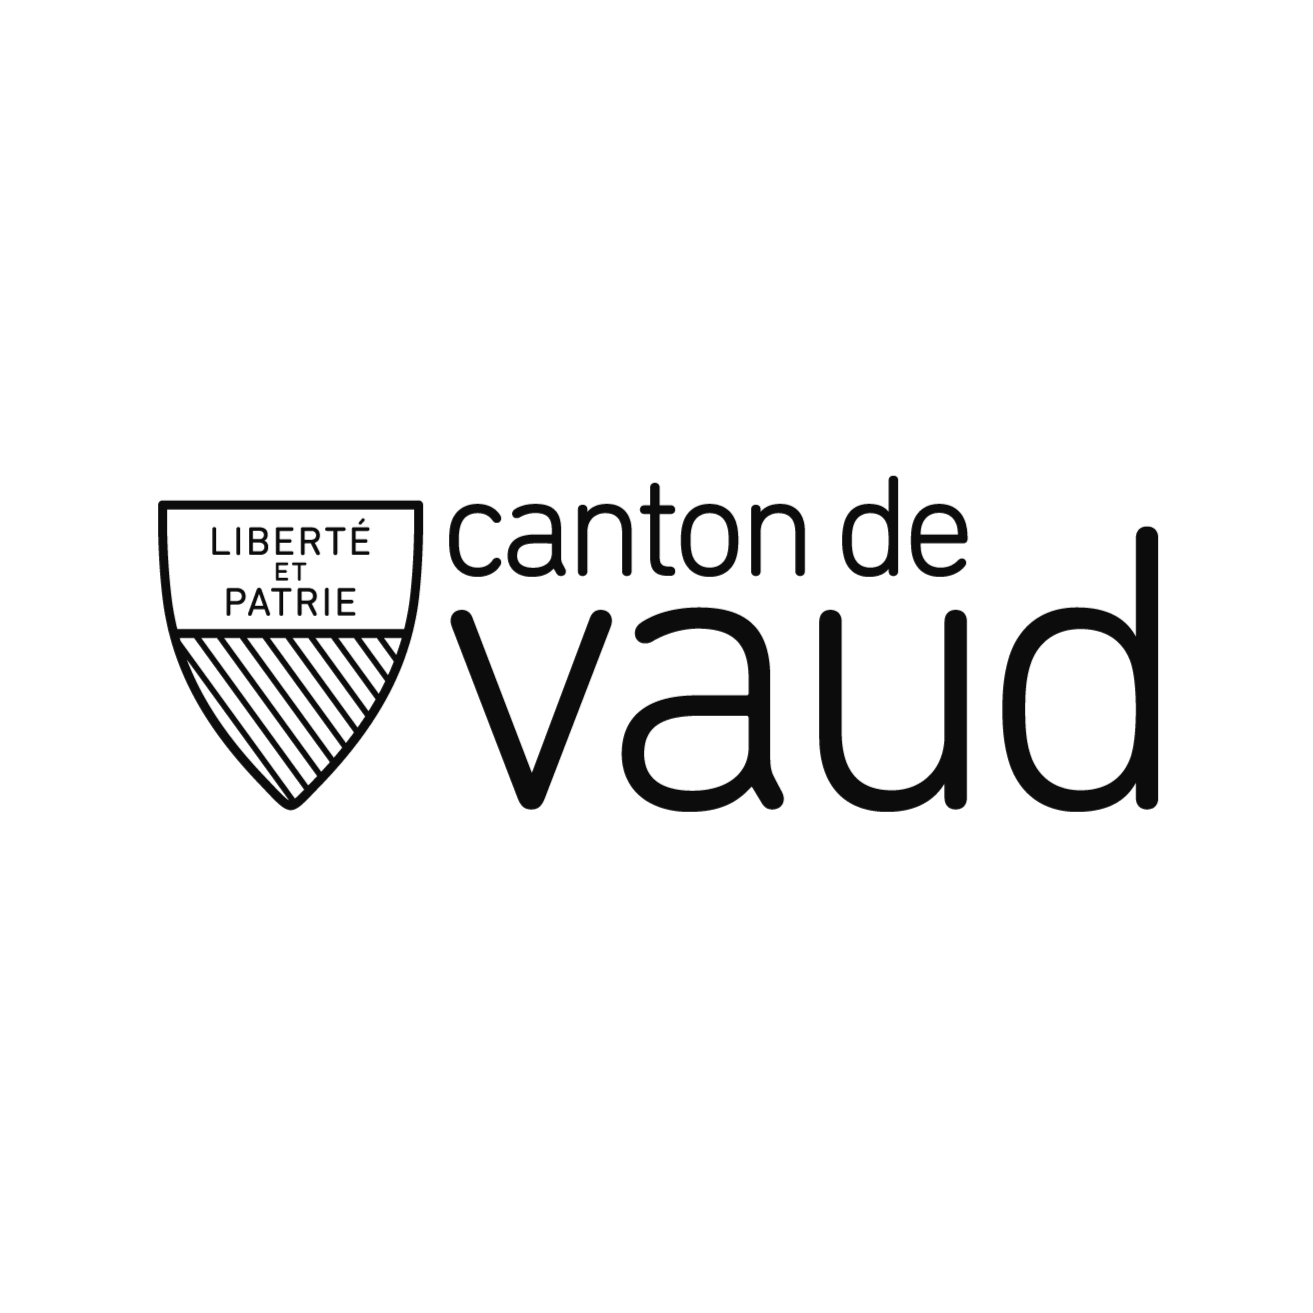 NEW 2018_Canton de Vaud_soutien_sponsoring_positif_1000px.png (0.1 MB)